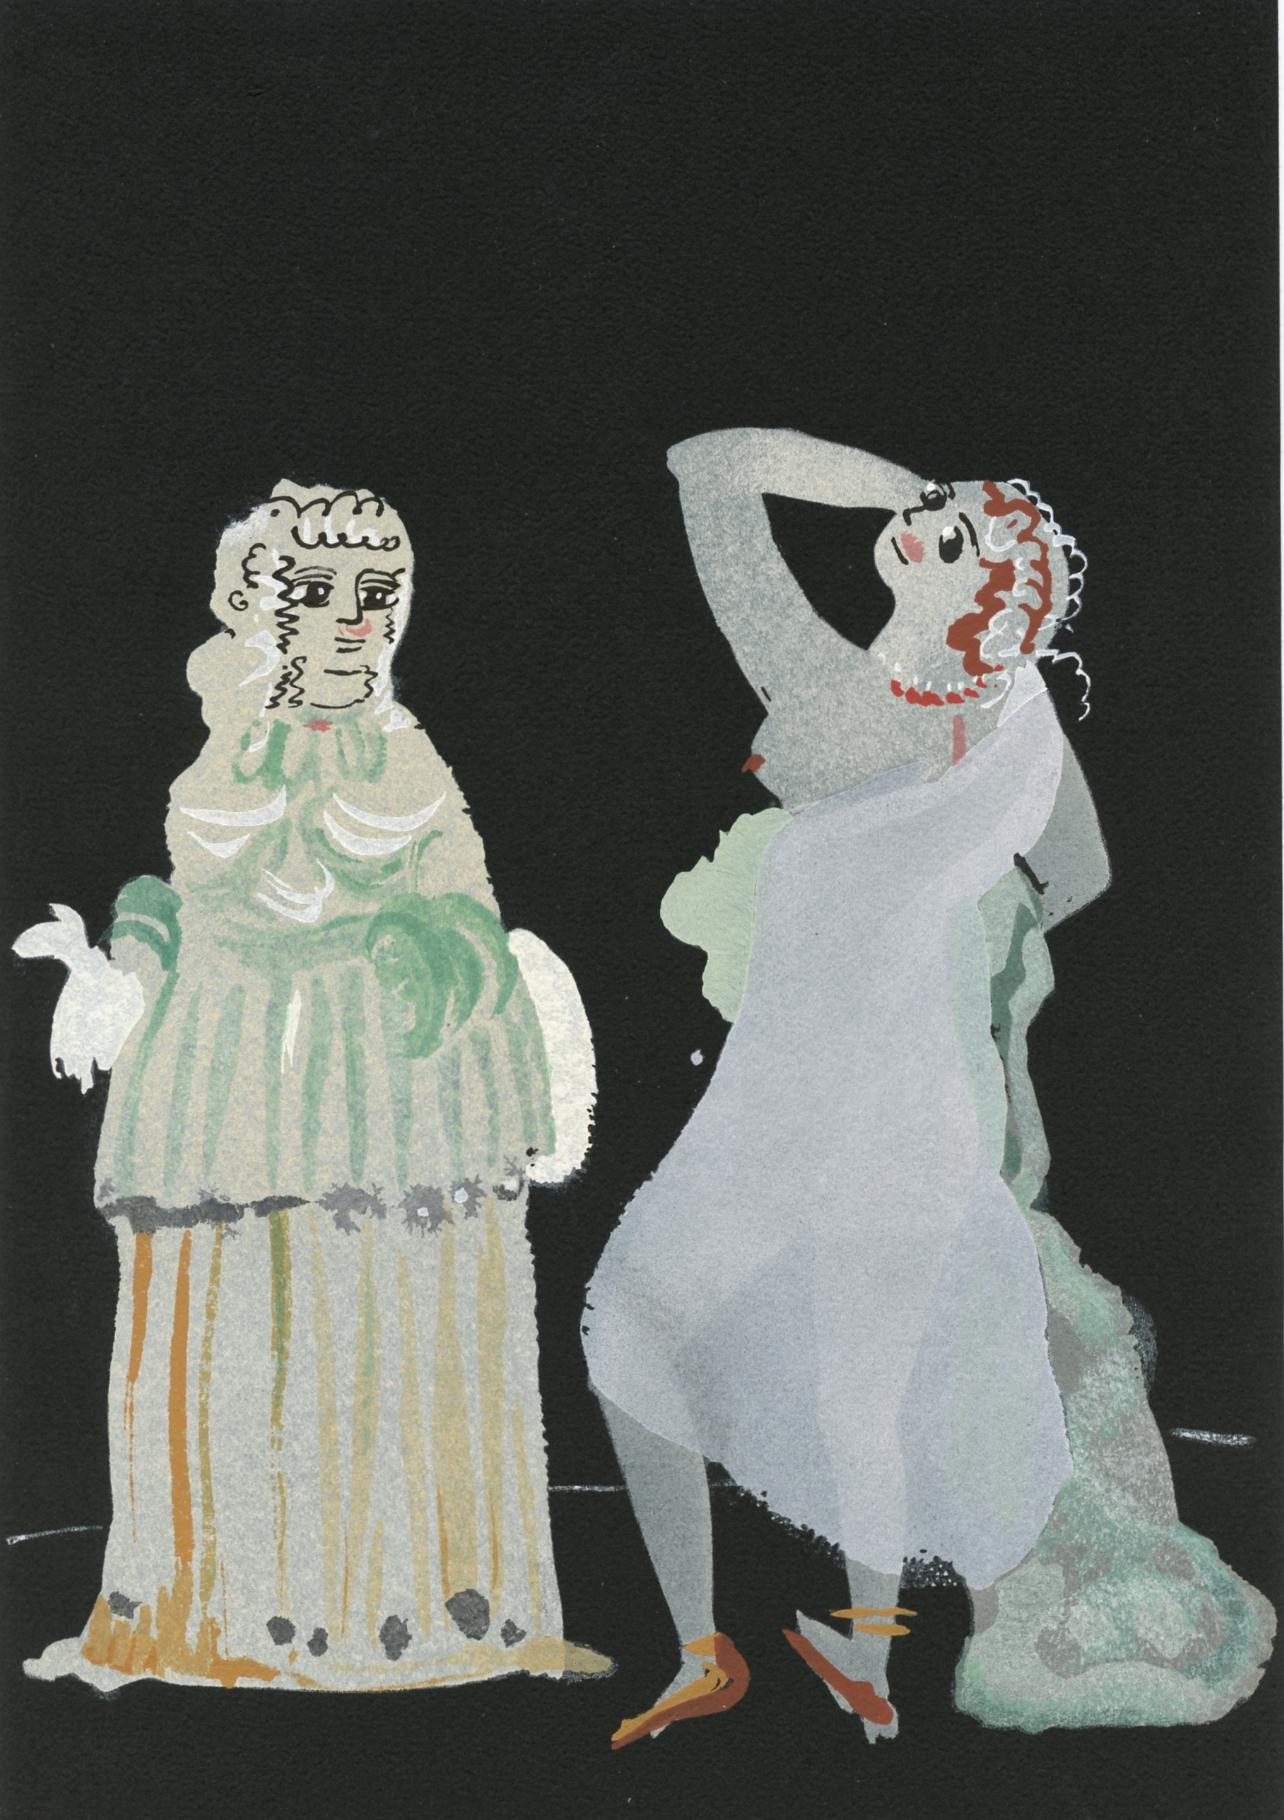 Derain, Composition, Salomé, The Limited Editions Club (after) - Print by André Derain